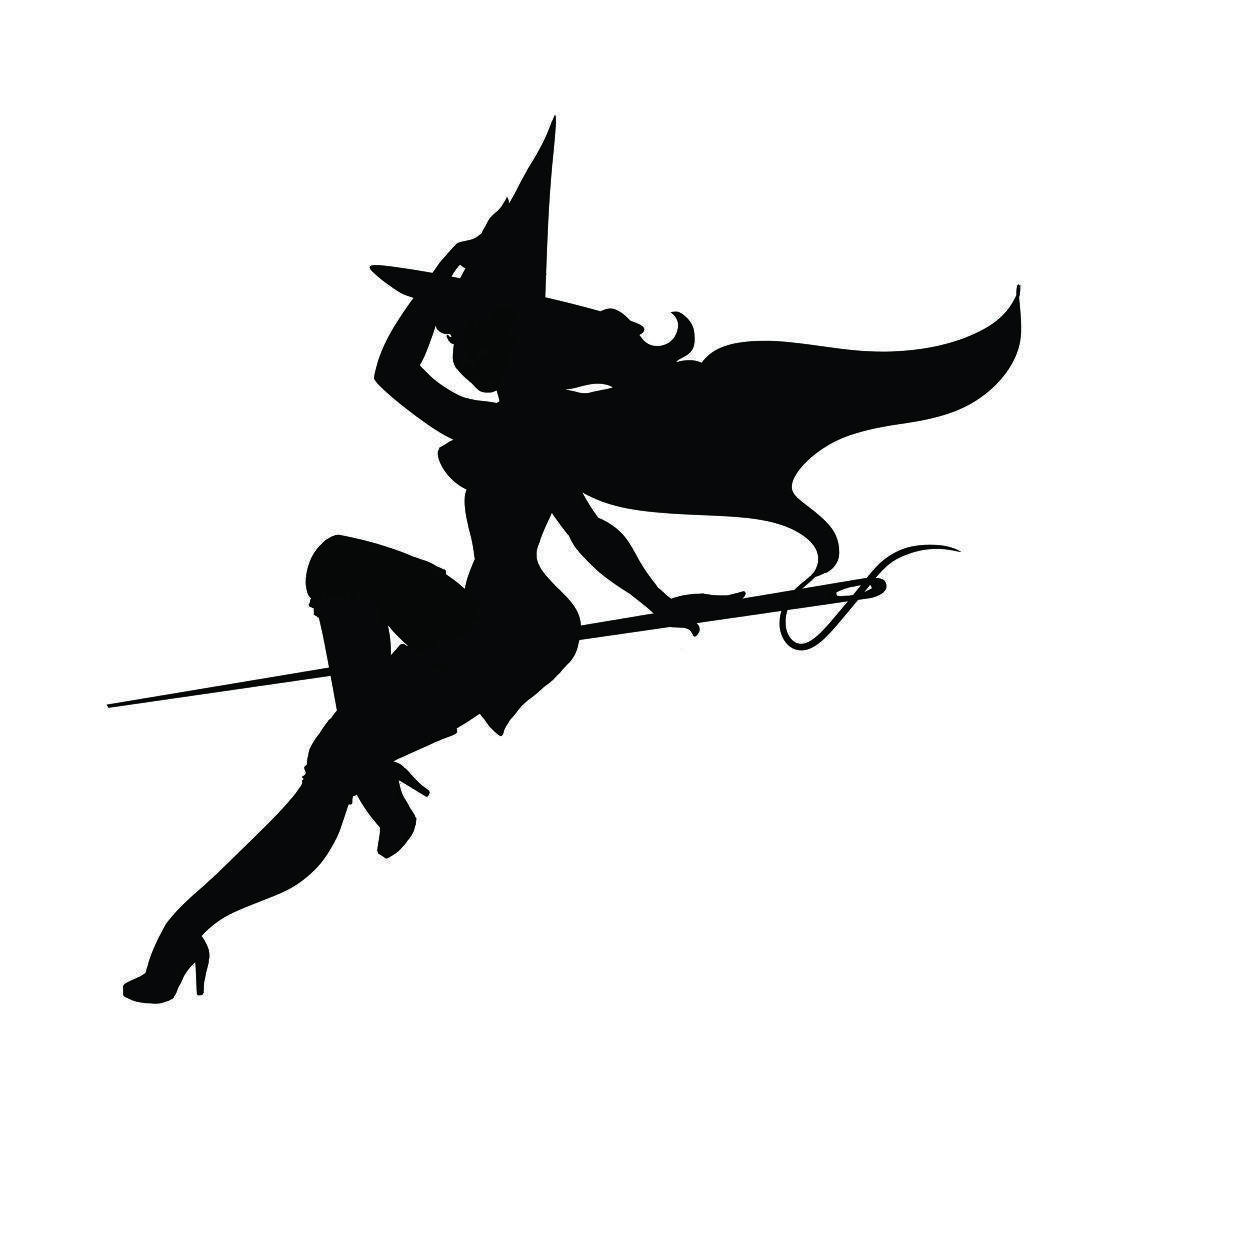 W.I.t.c.h. Logo - The Stitch Witch Logo - Megs Makes Art